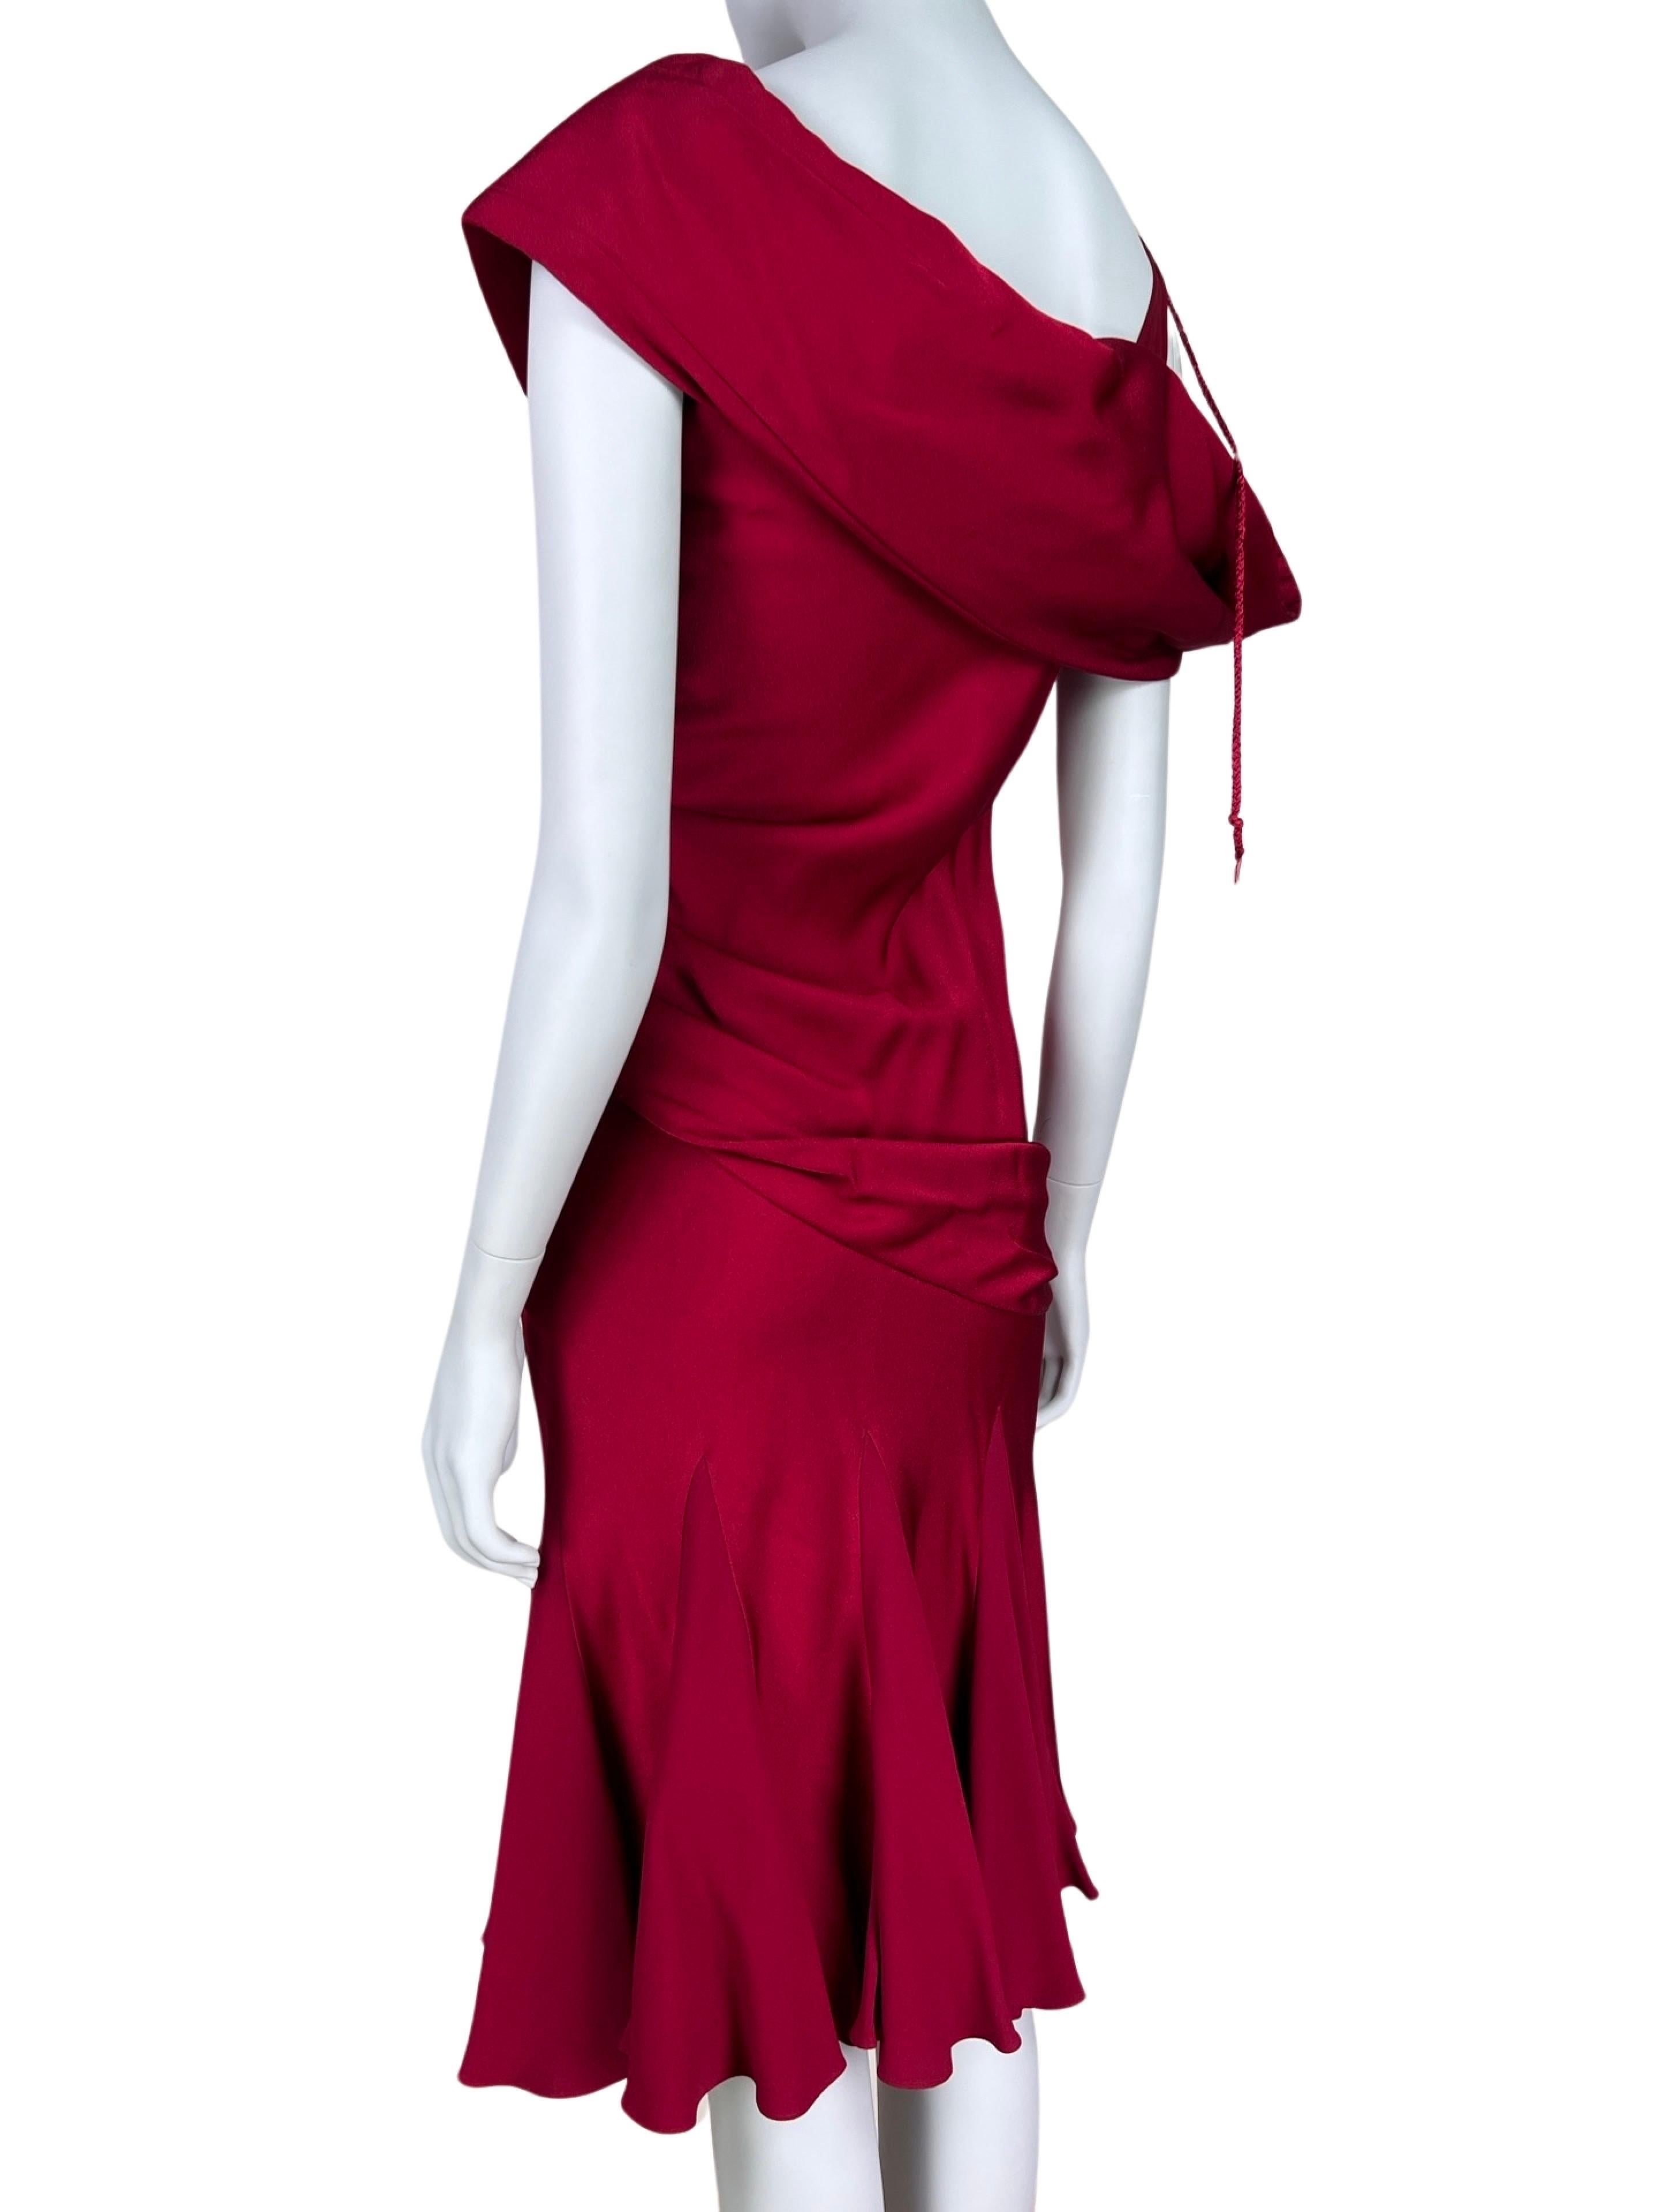 John Galliano Fall 2002 Red Draped Dress For Sale 4